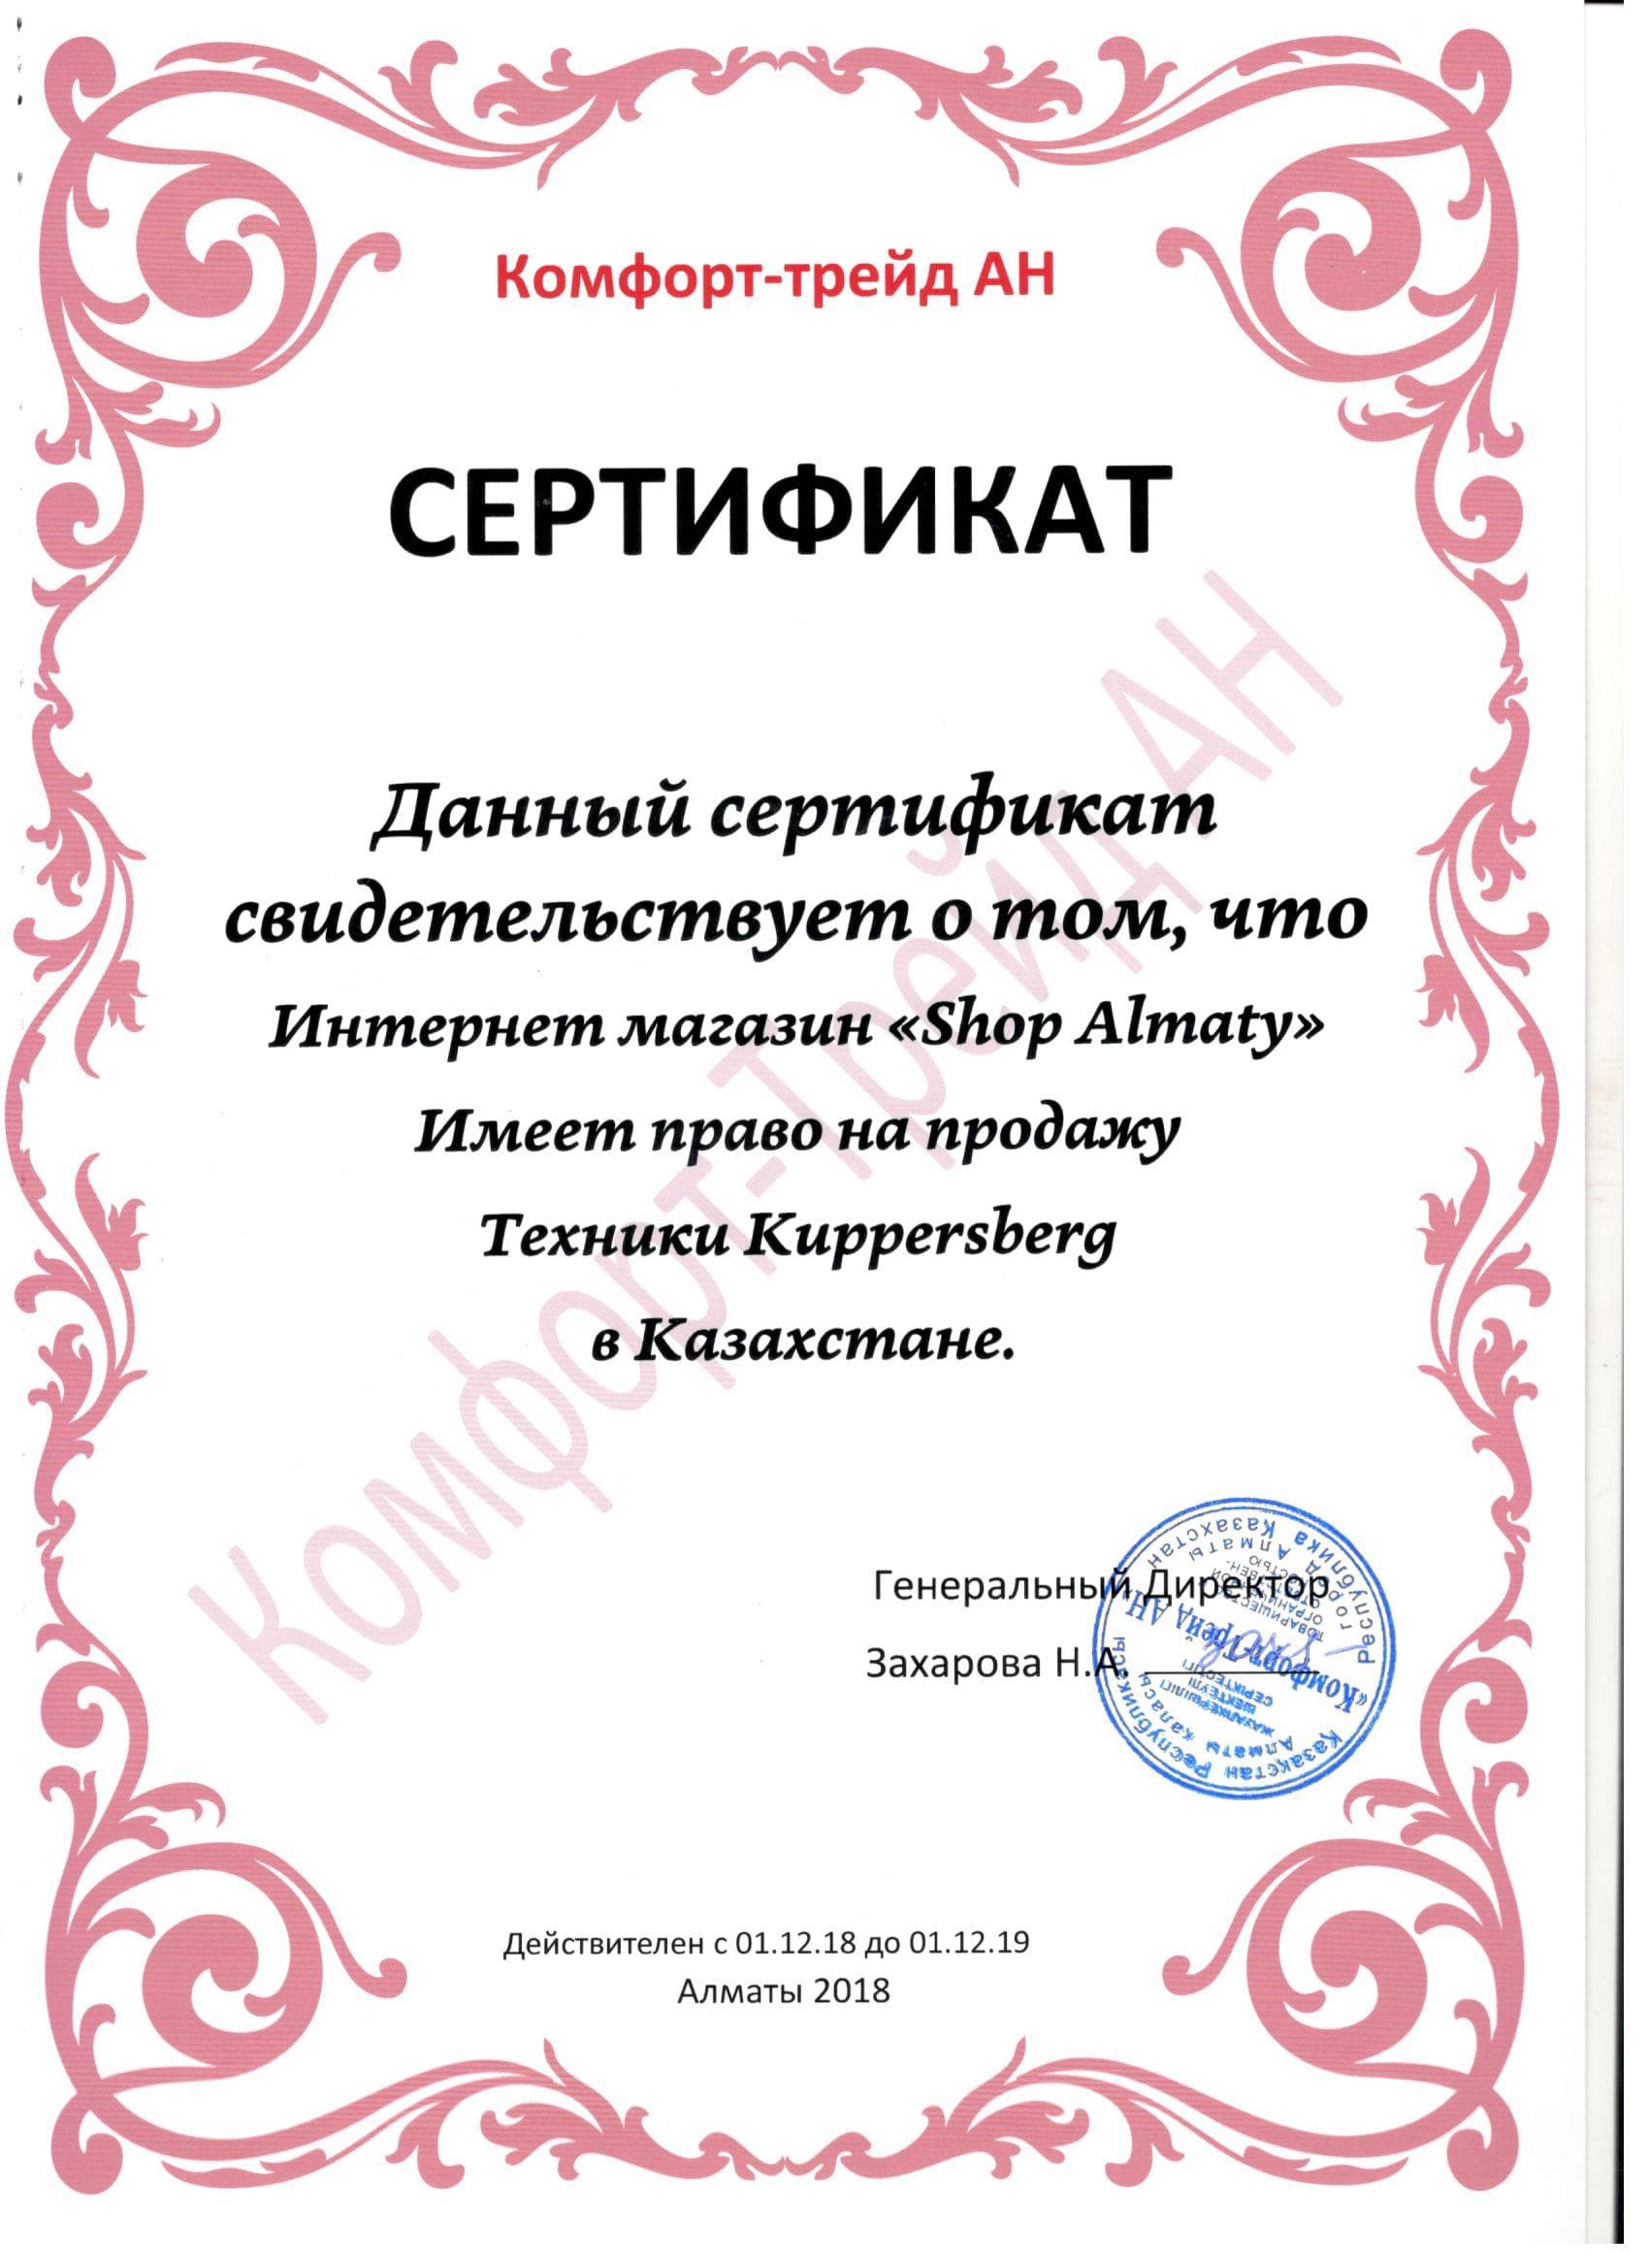 Сертификат KUPPERSBERG